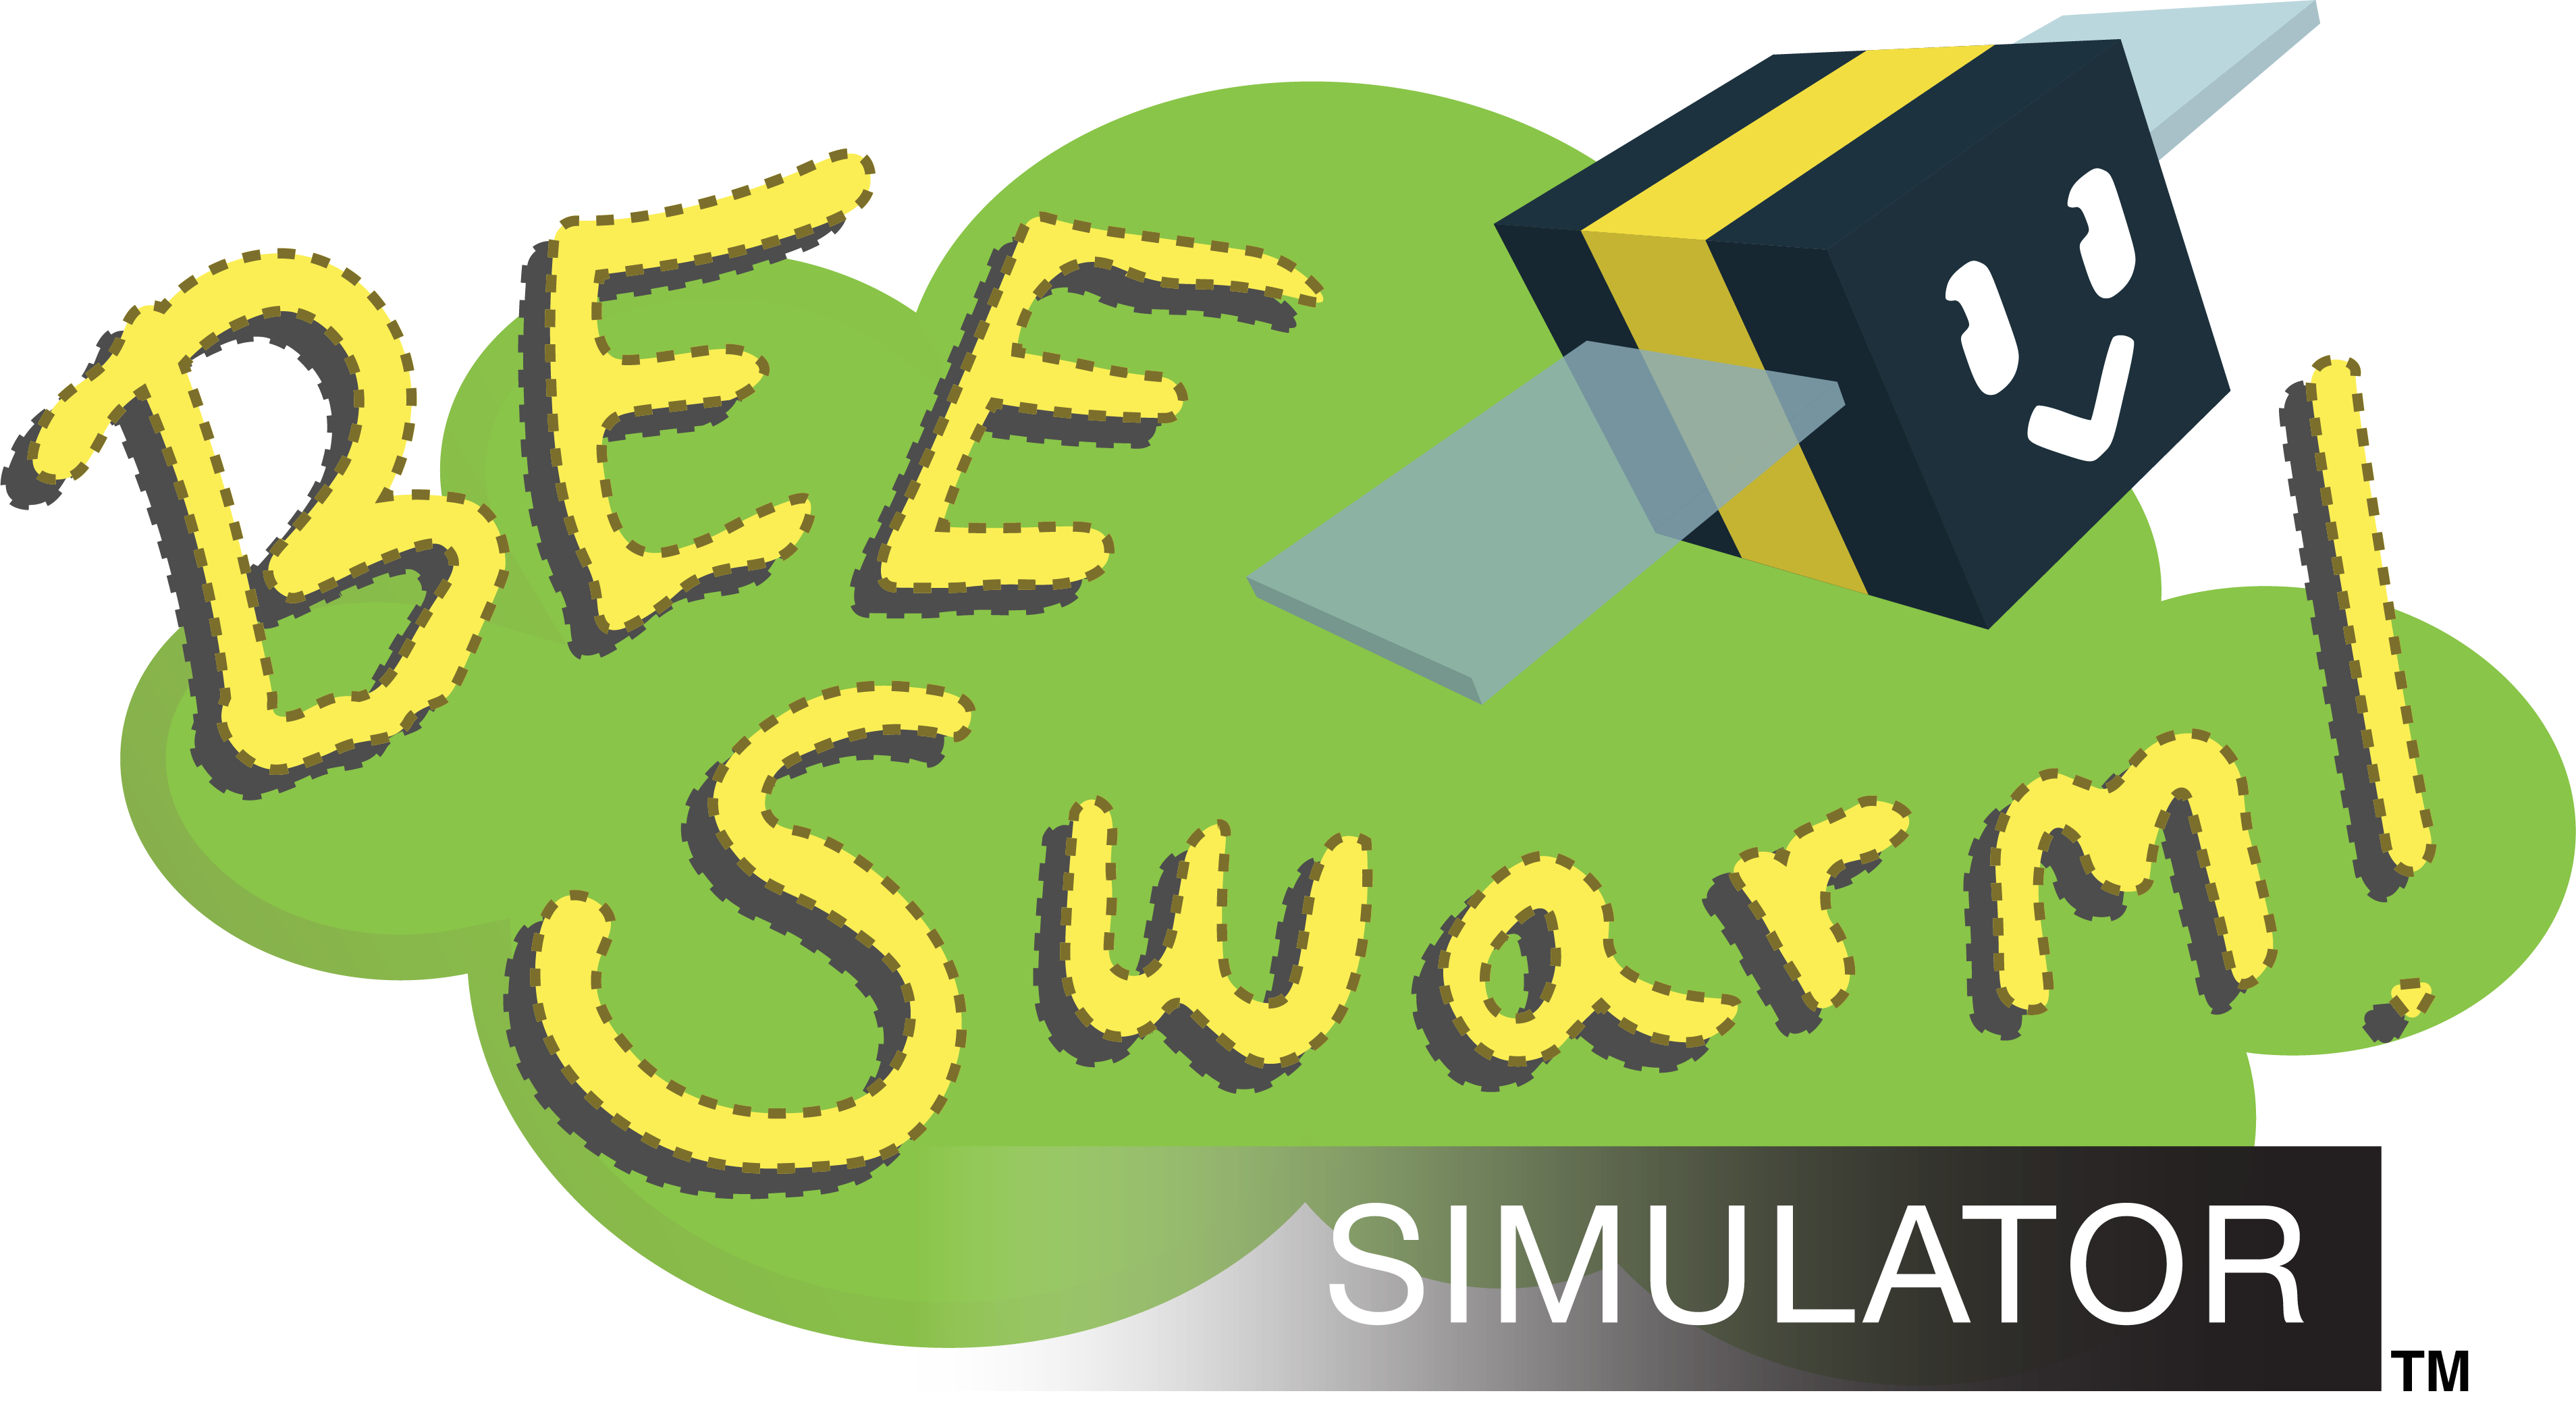  Bee Swarm Simulator – Gummy Bear Action Figure Pack w